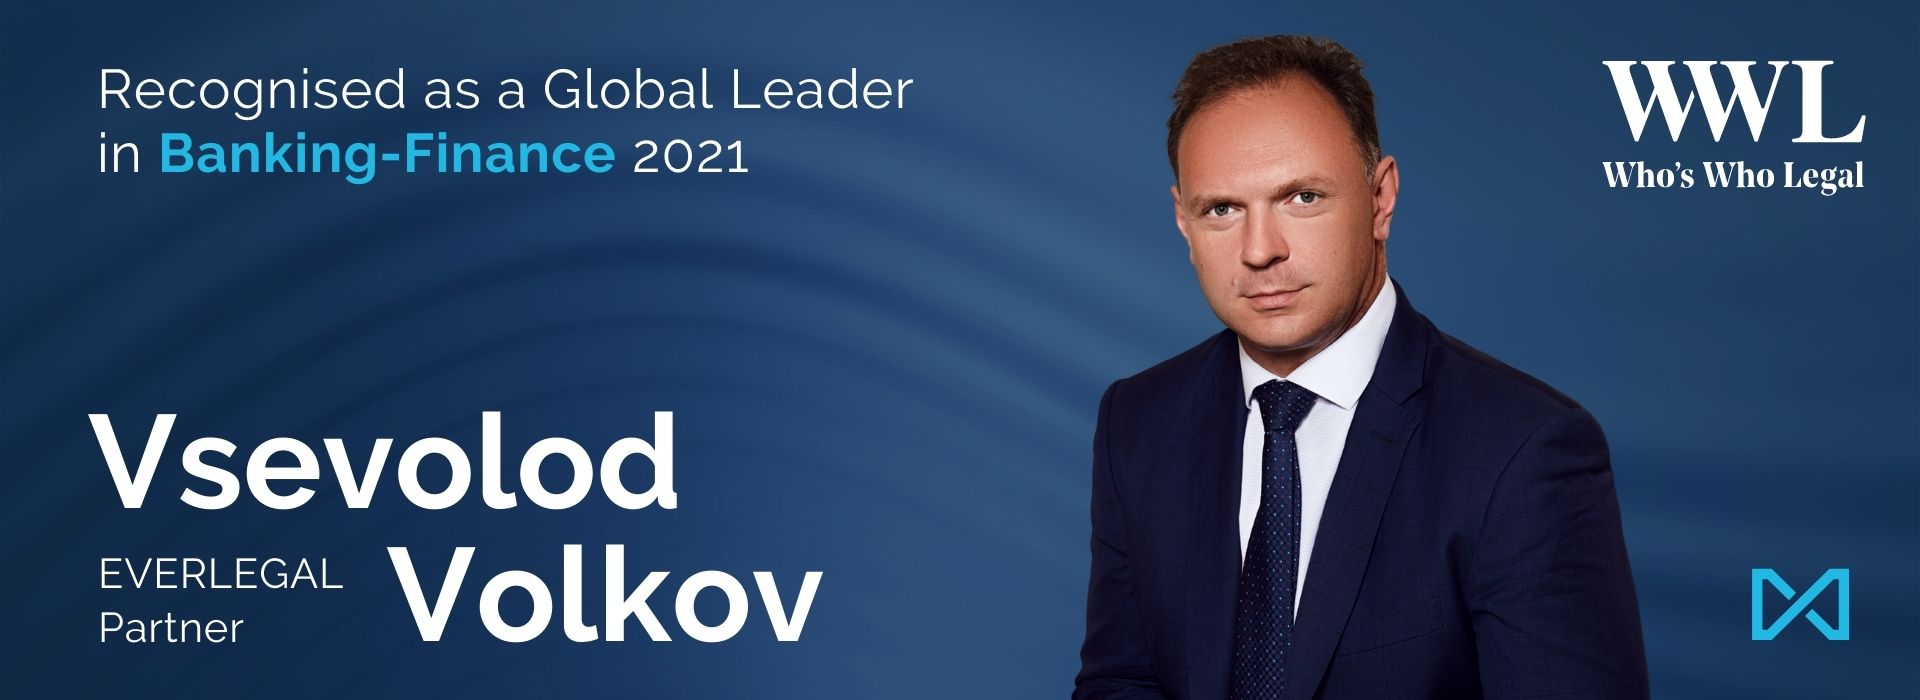 Vsevolod Volkov Is Eecognised as a Global Leader in WWL: Banking-Finance